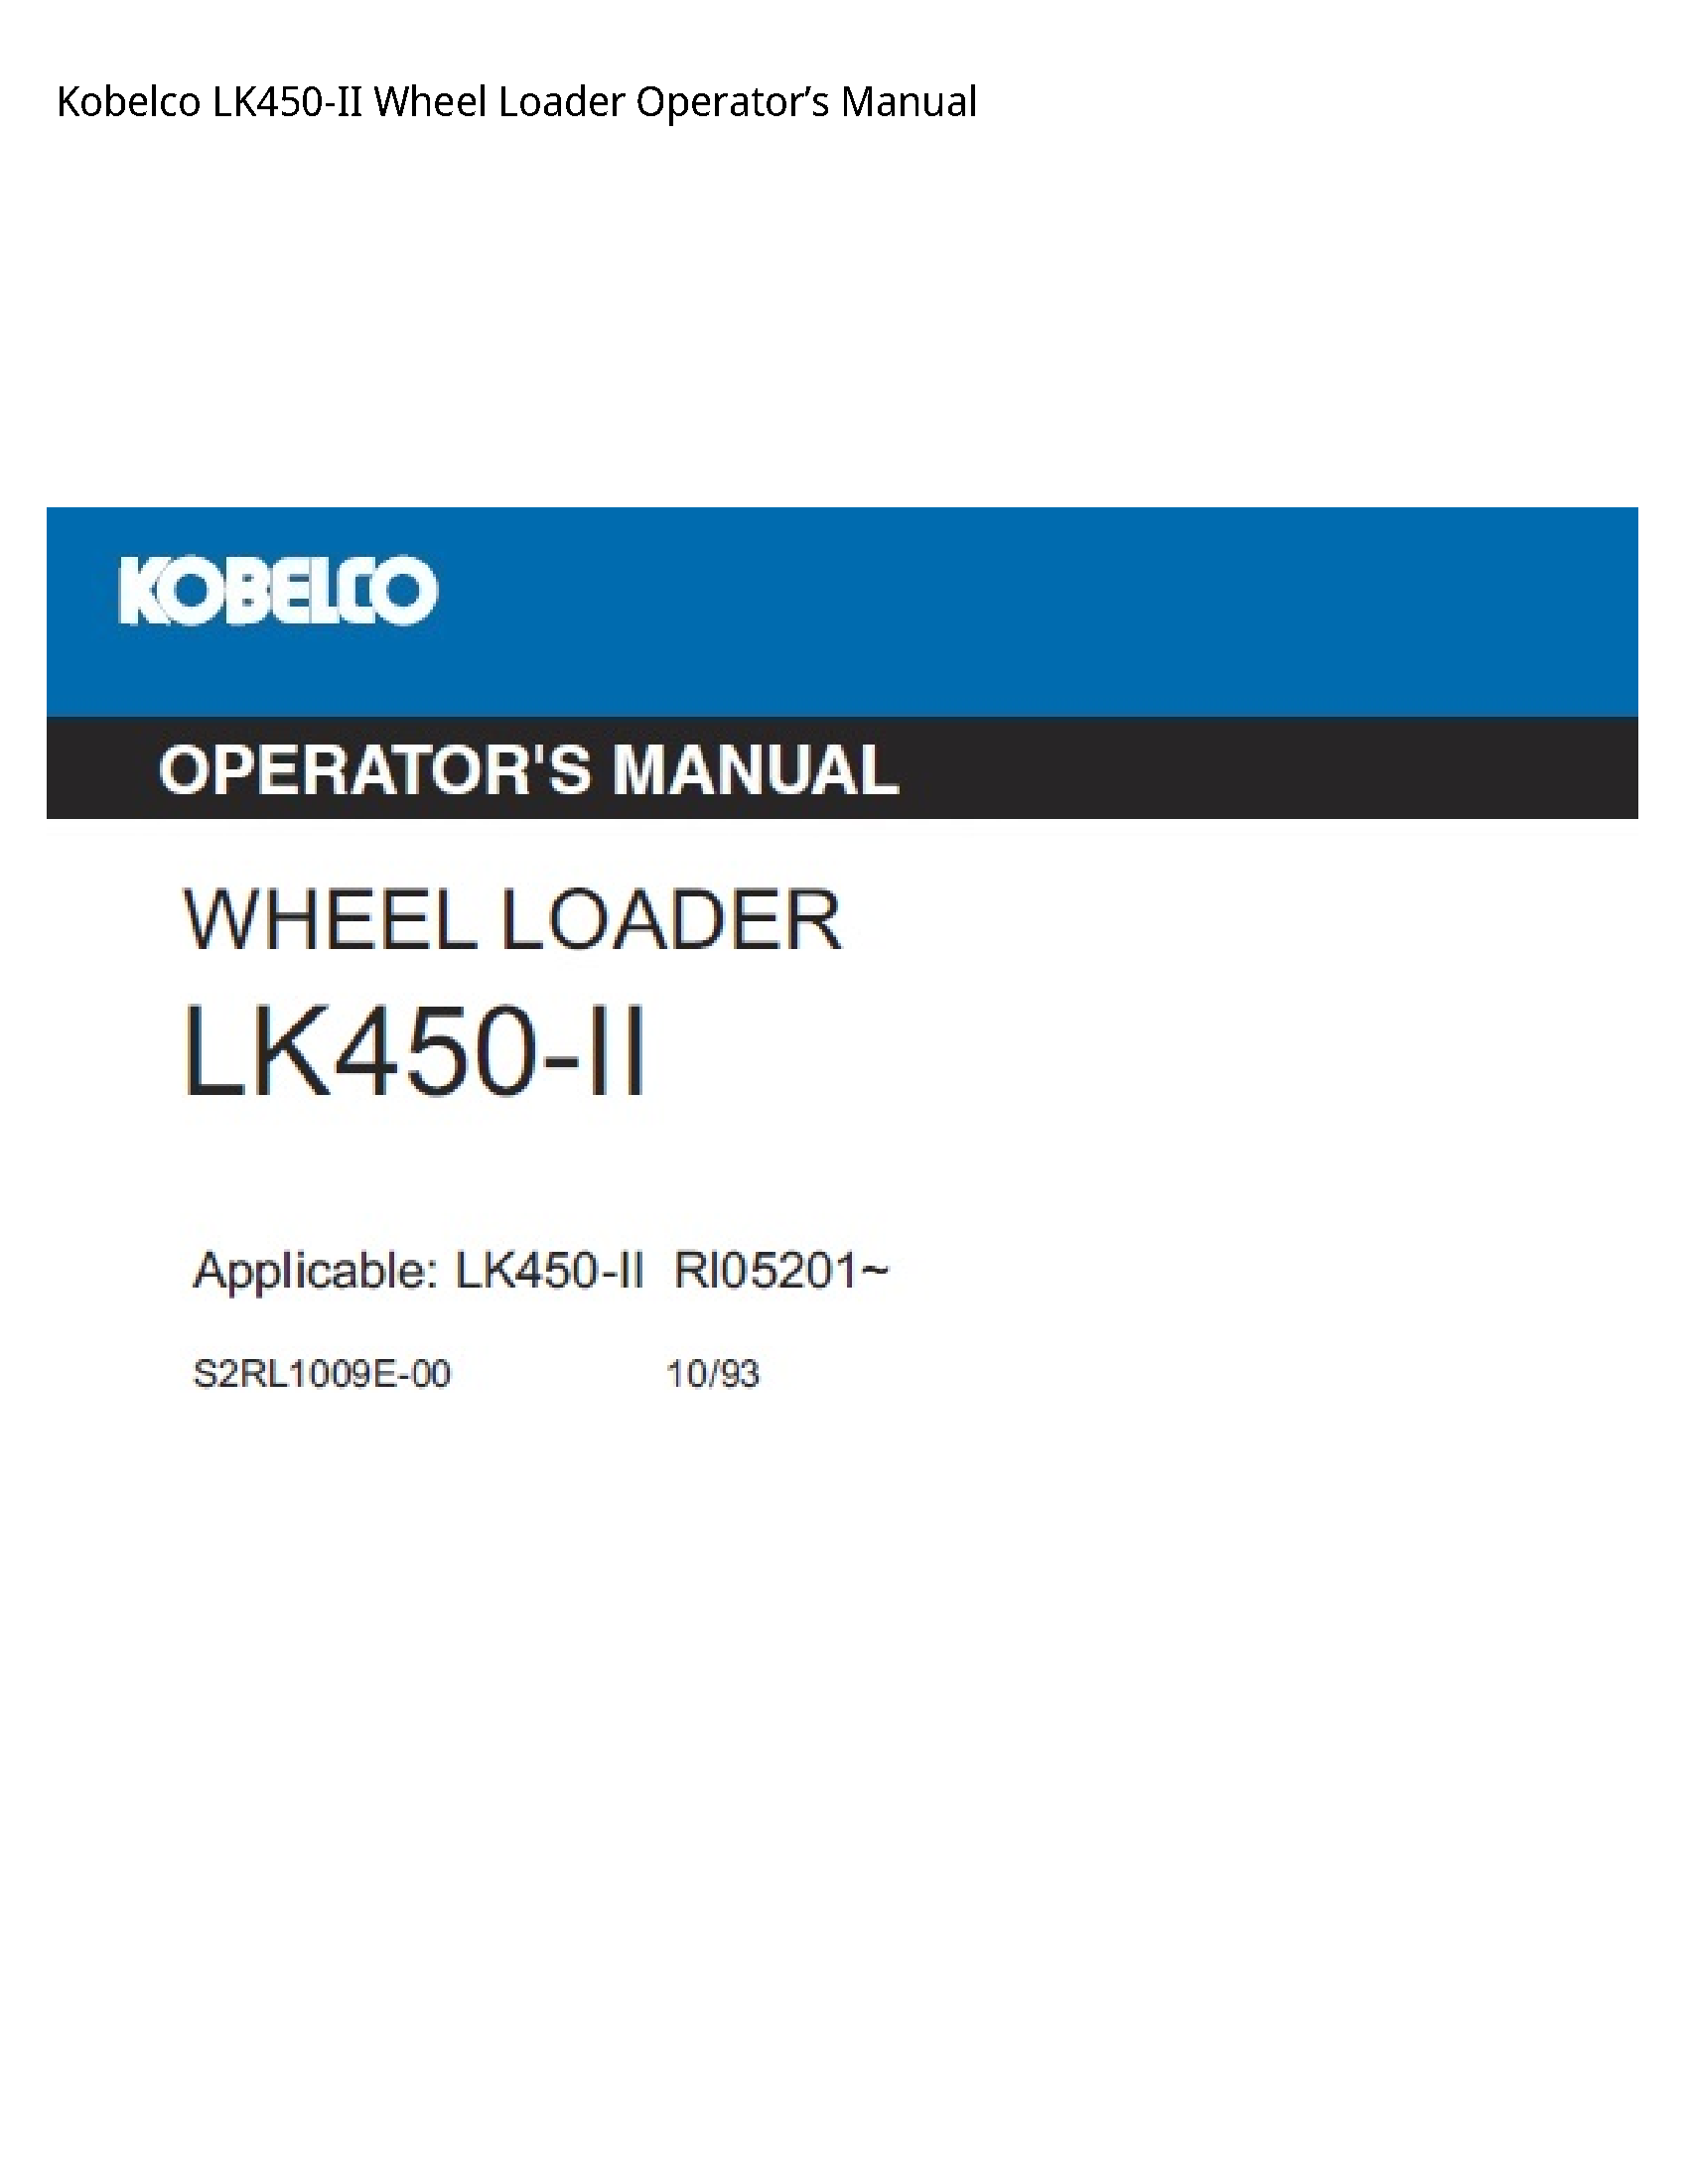 Kobelco LK450-II Wheel Loader Operator’s manual